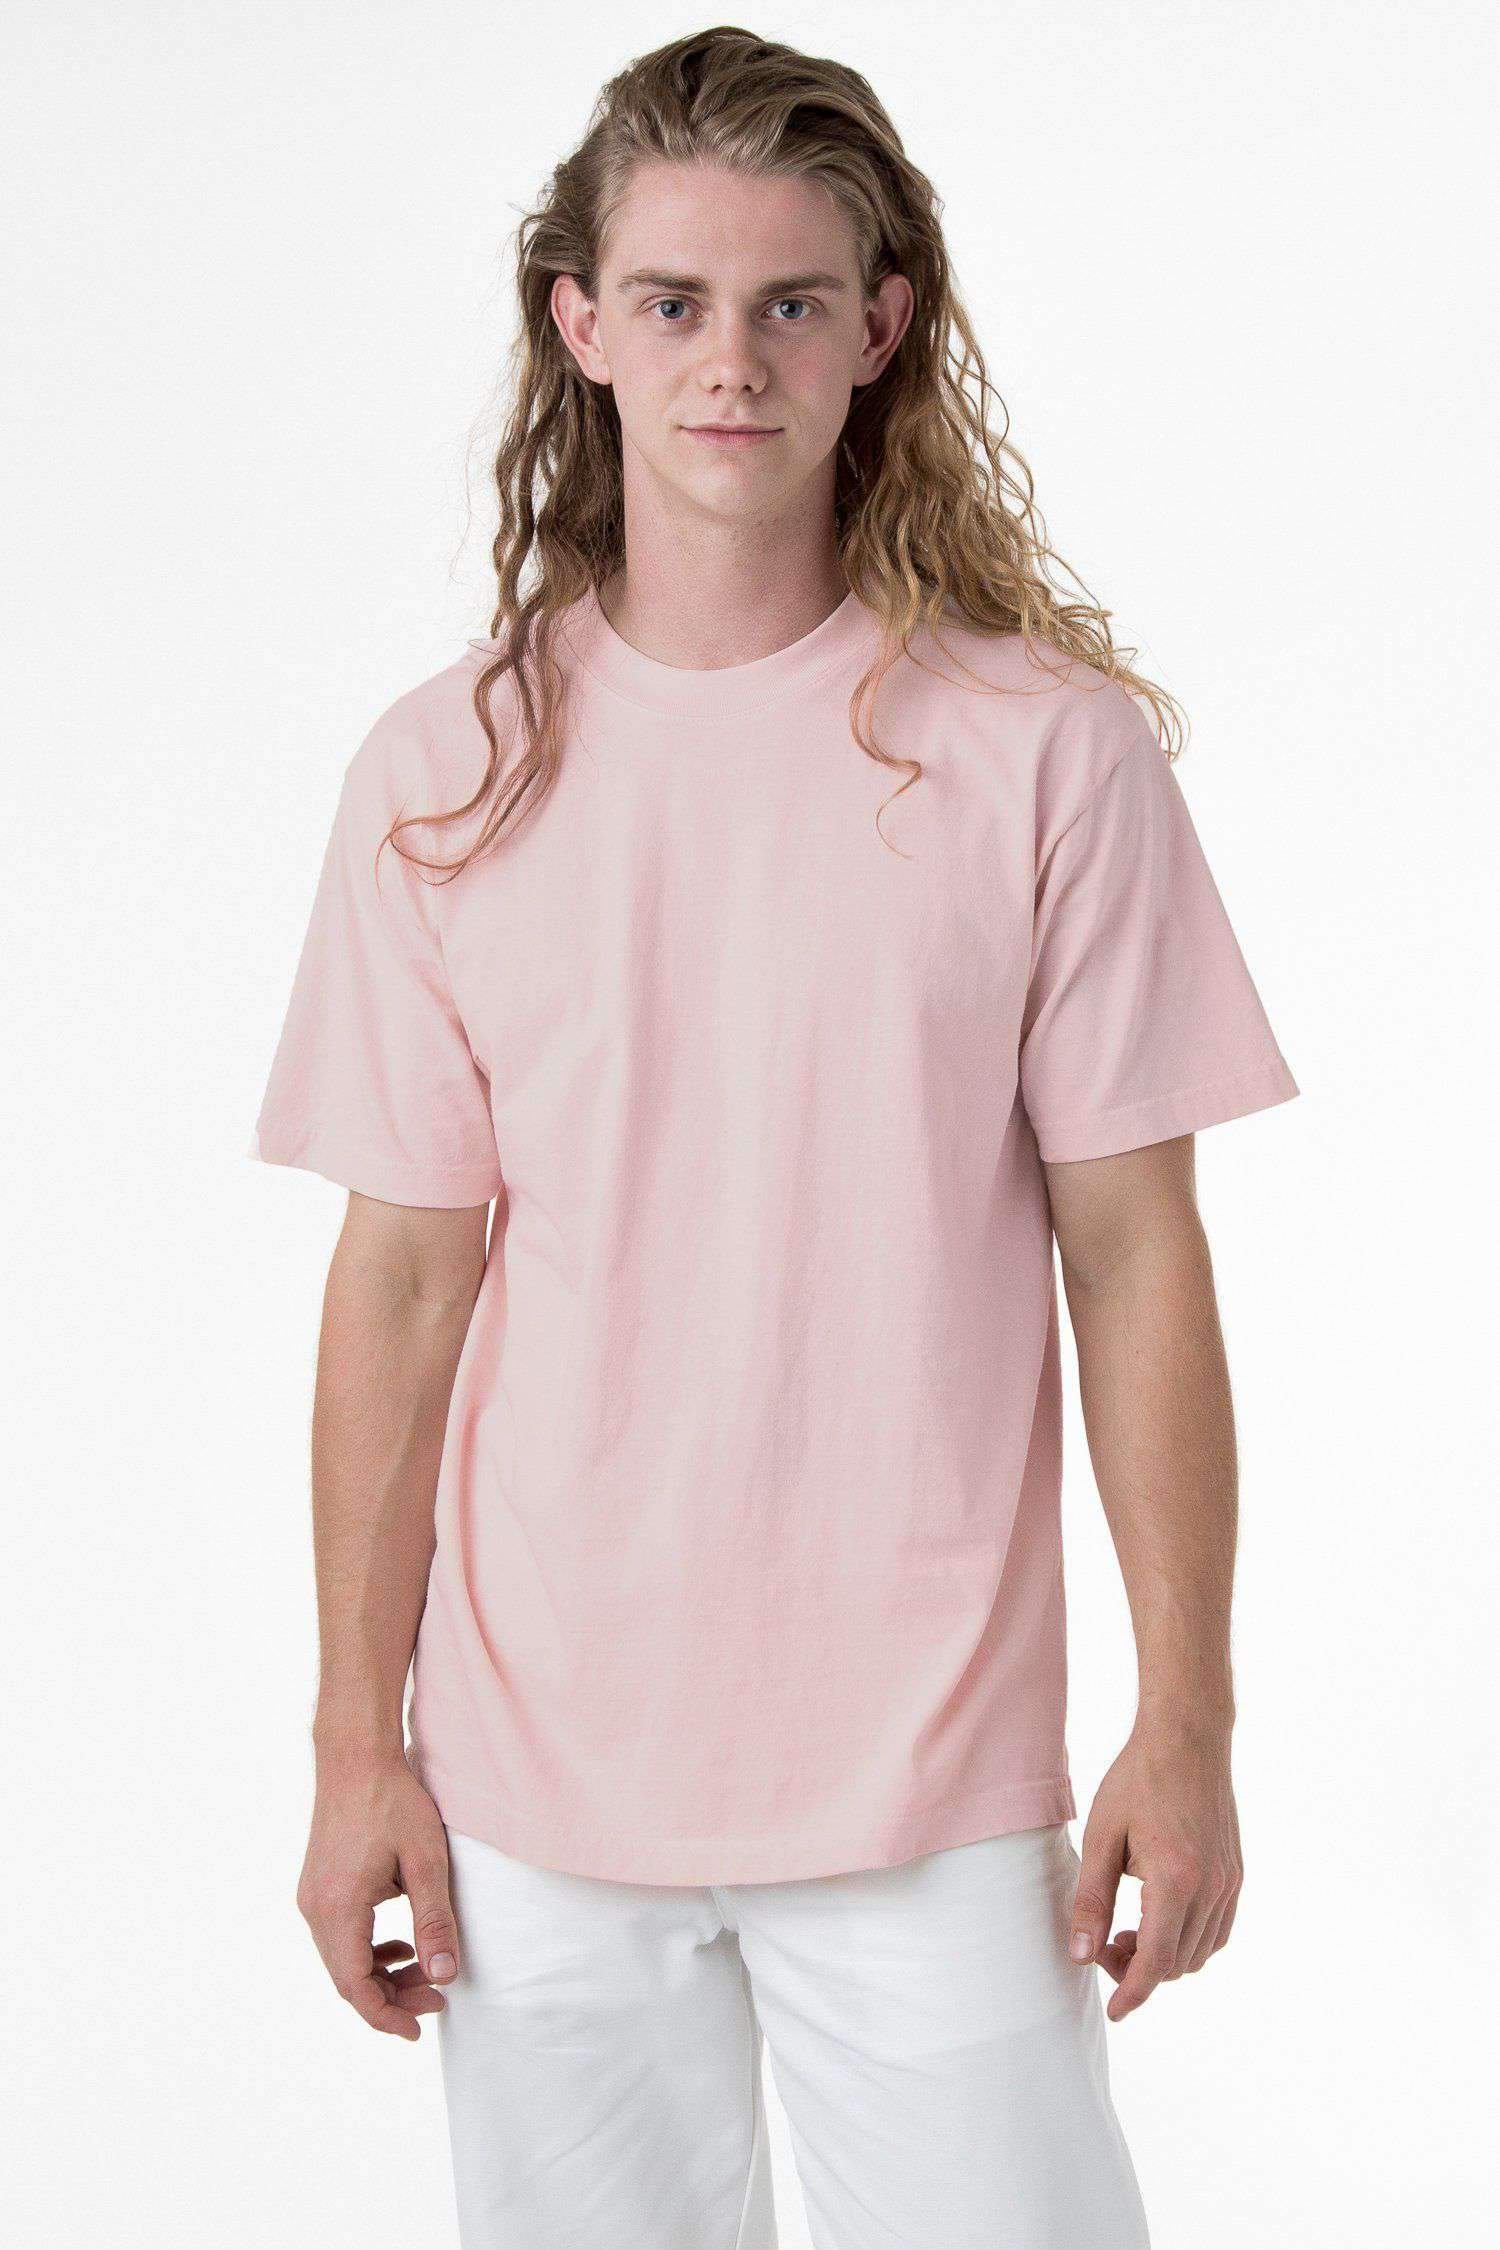 1801GD - 6.5oz Garment Dye Pastel Crew Neck T-Shirt T-Shirt Los Angeles Apparel Light Pink S 